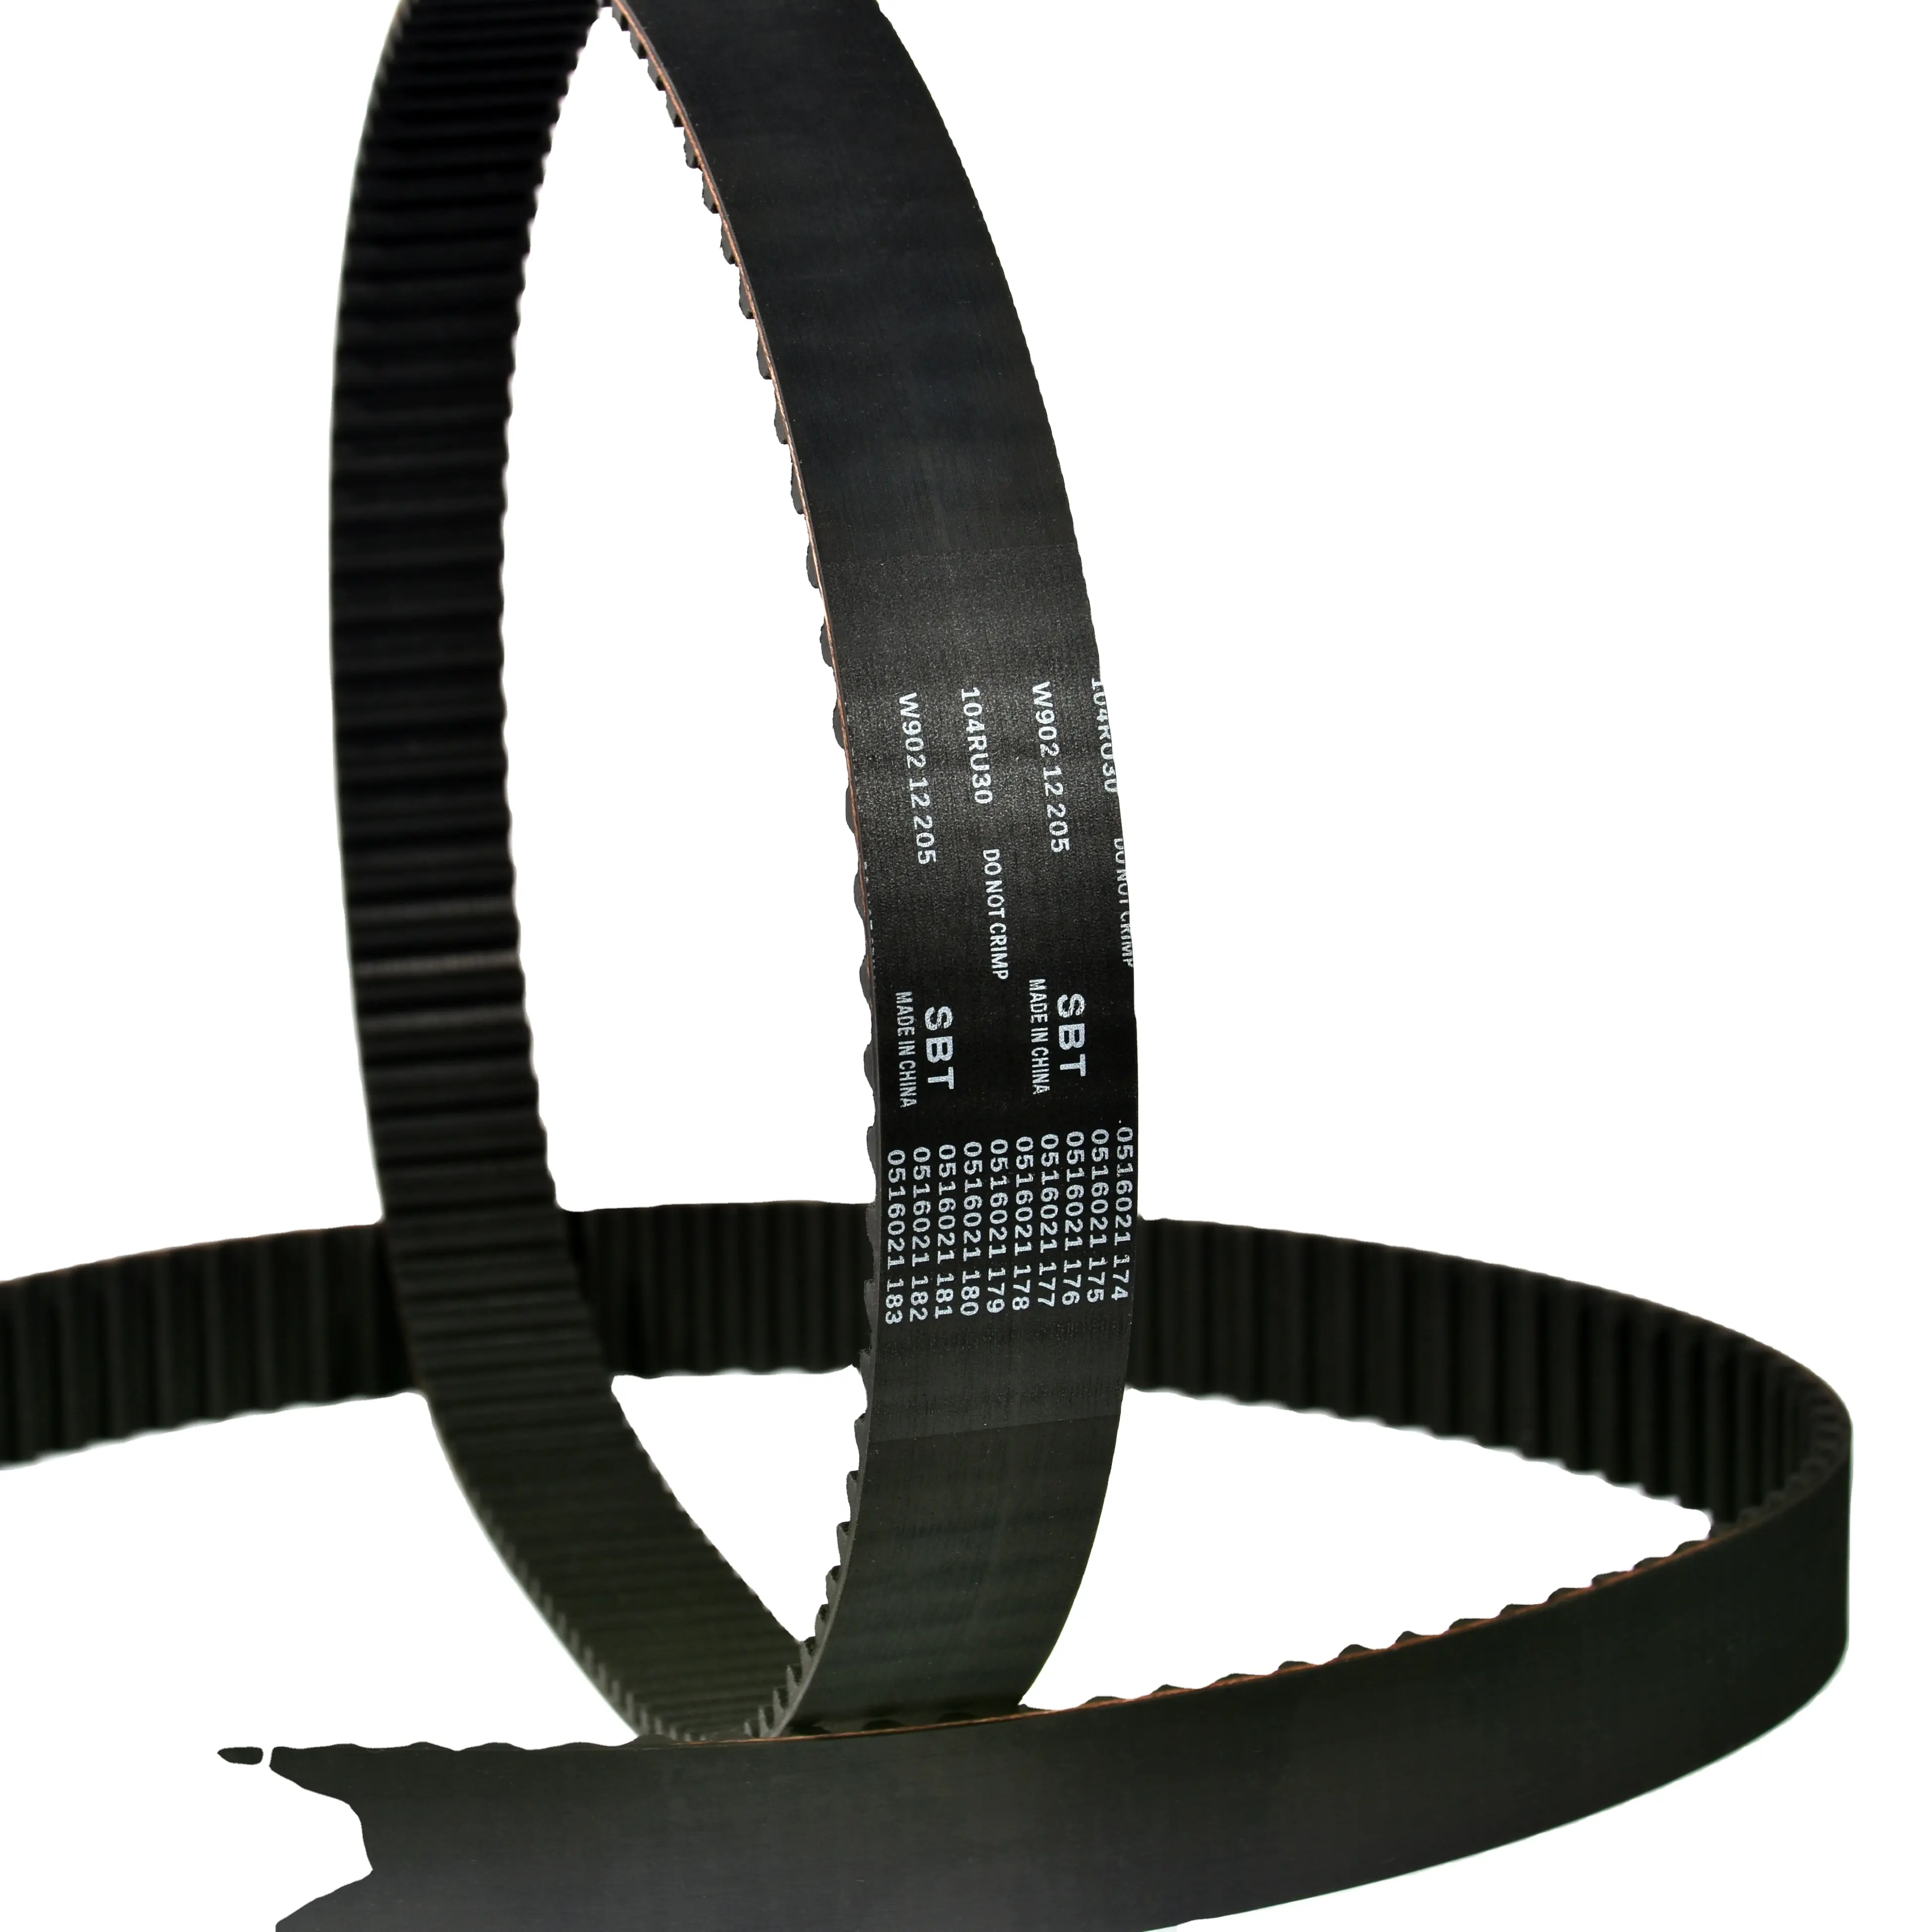 SBT RU Type Automotive timing belts for car MR YU S8M ZA all model rubber belt